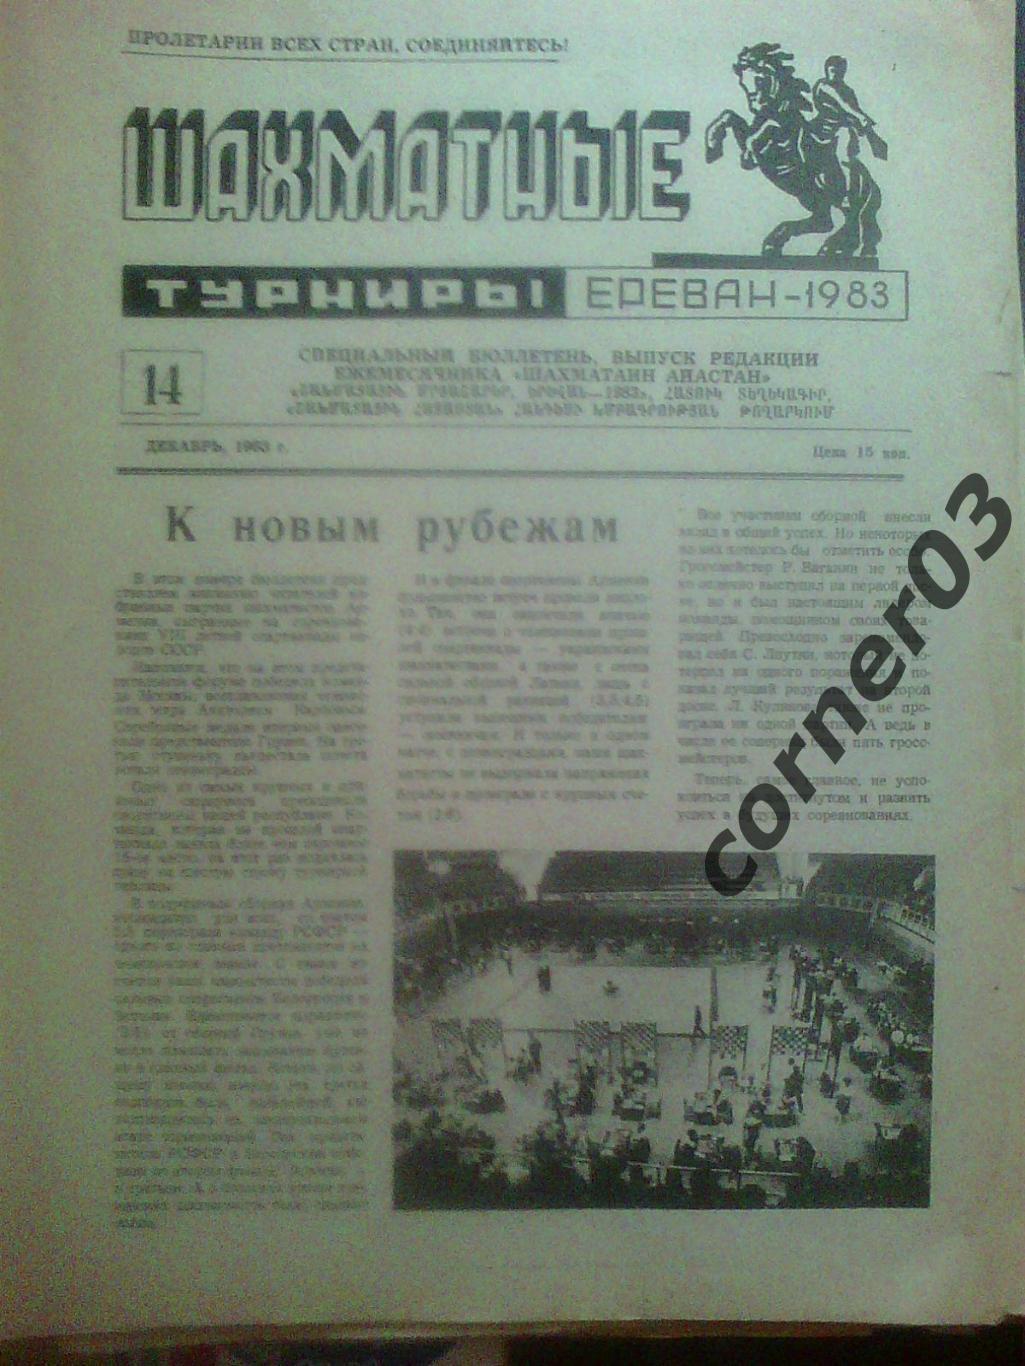 Шахматные турниры. Ереван 1983 №14